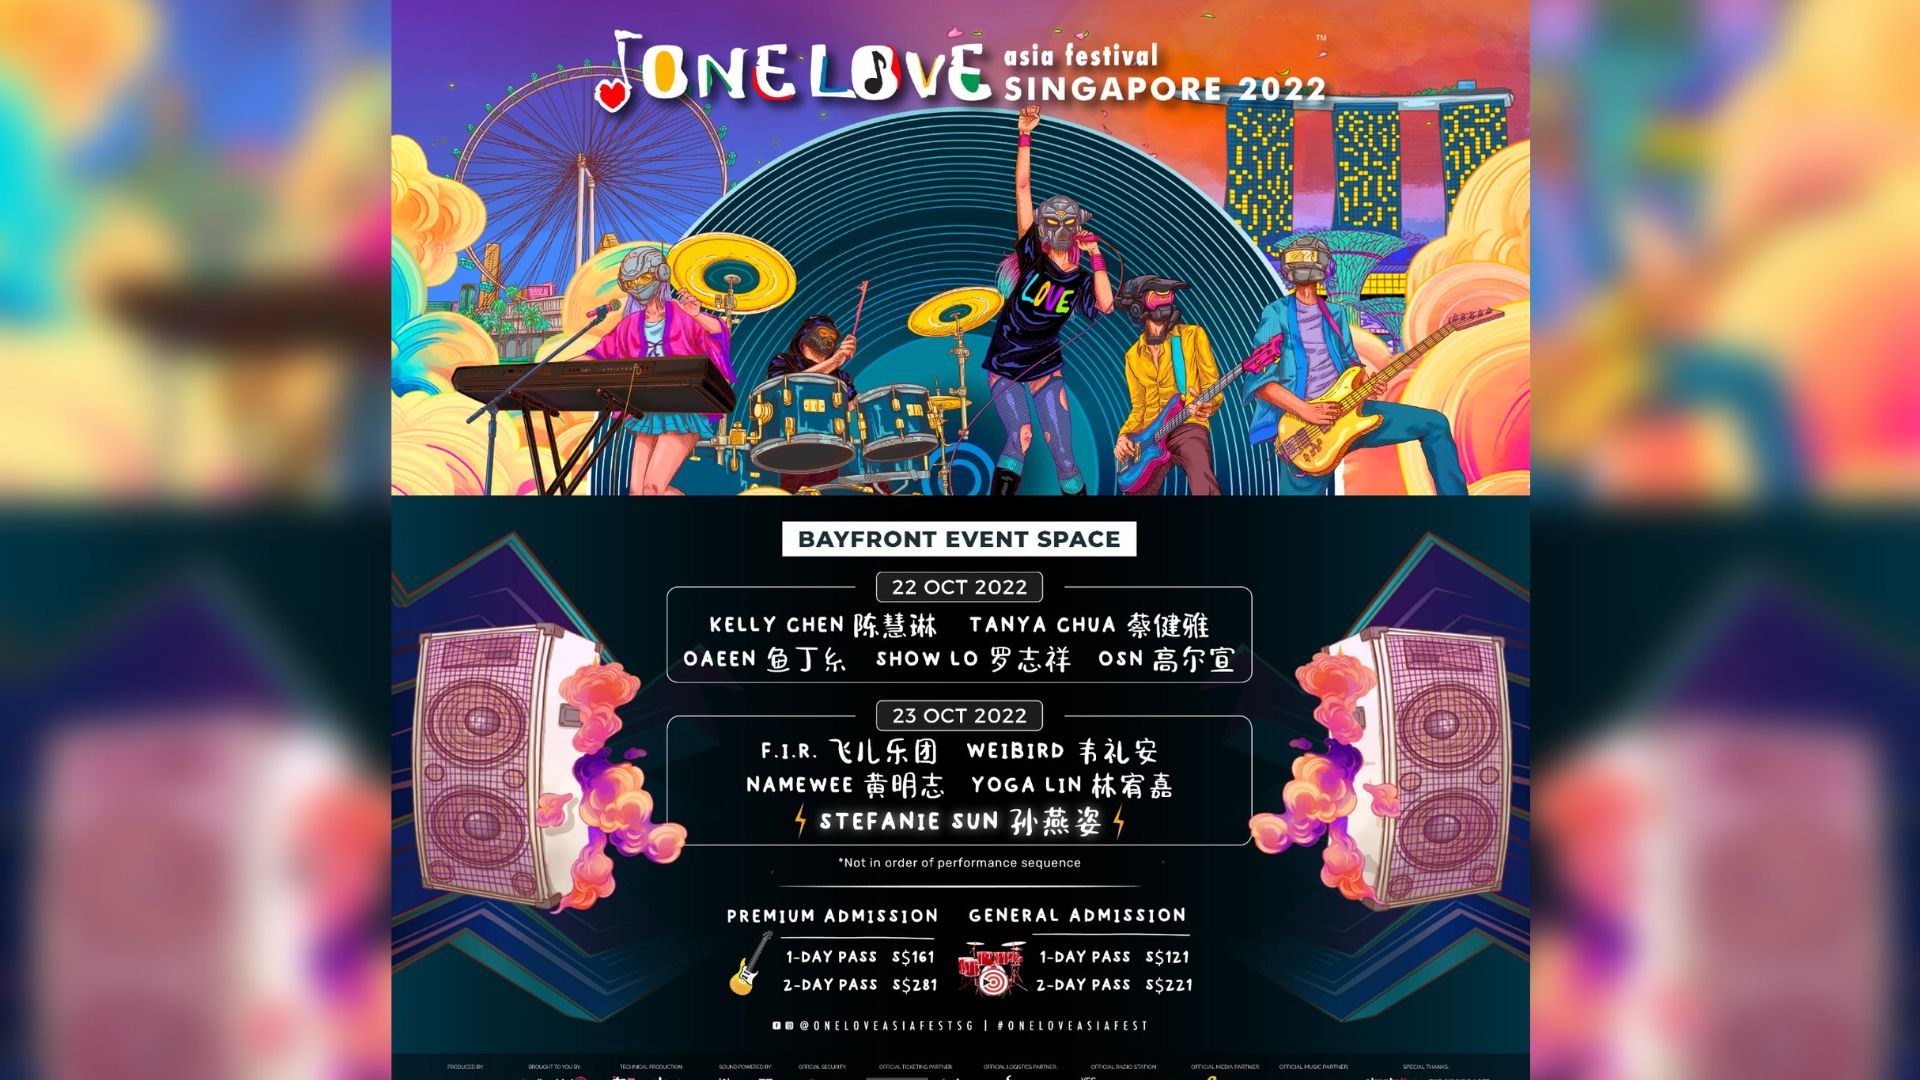 Outdoor concert One Love Asia Festival 2022 with Stefanie Sun, Tanya Chua, is a go!